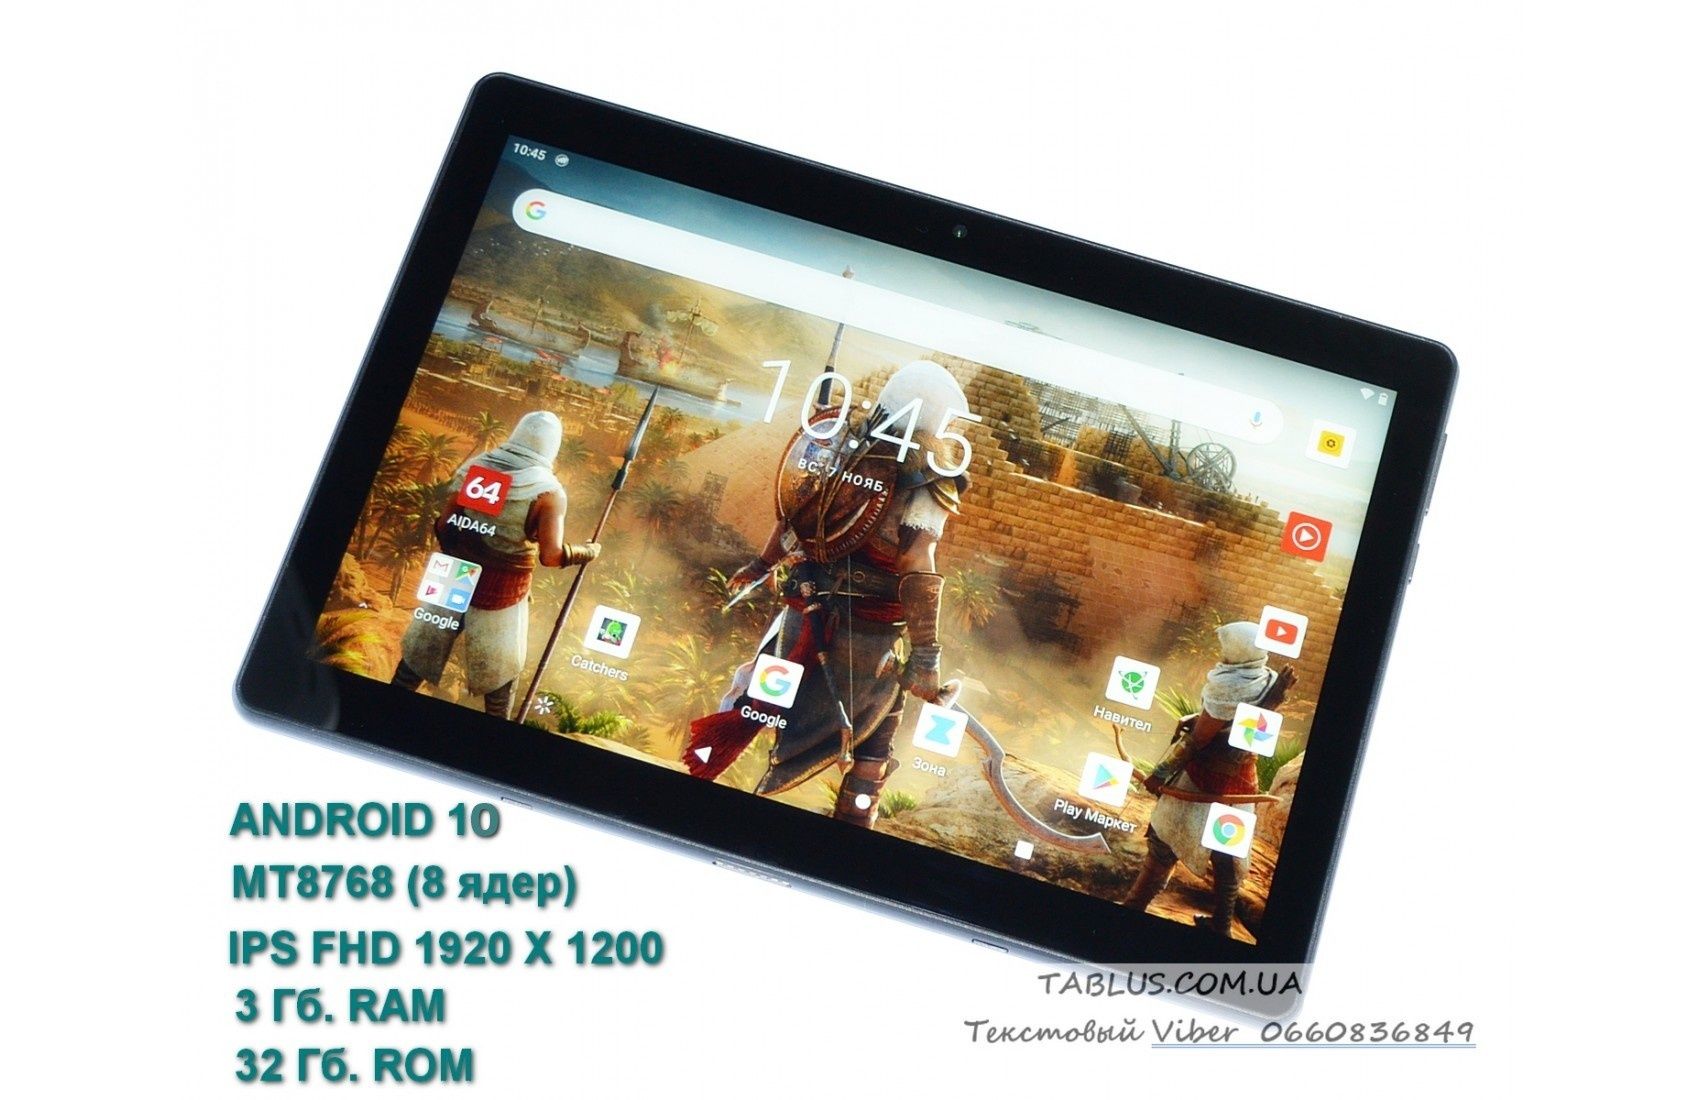 ONN Pro! Мощный 10" FullHD планшет 3 Гб.\32 ГБ.! Android 10\11! 8 ядер